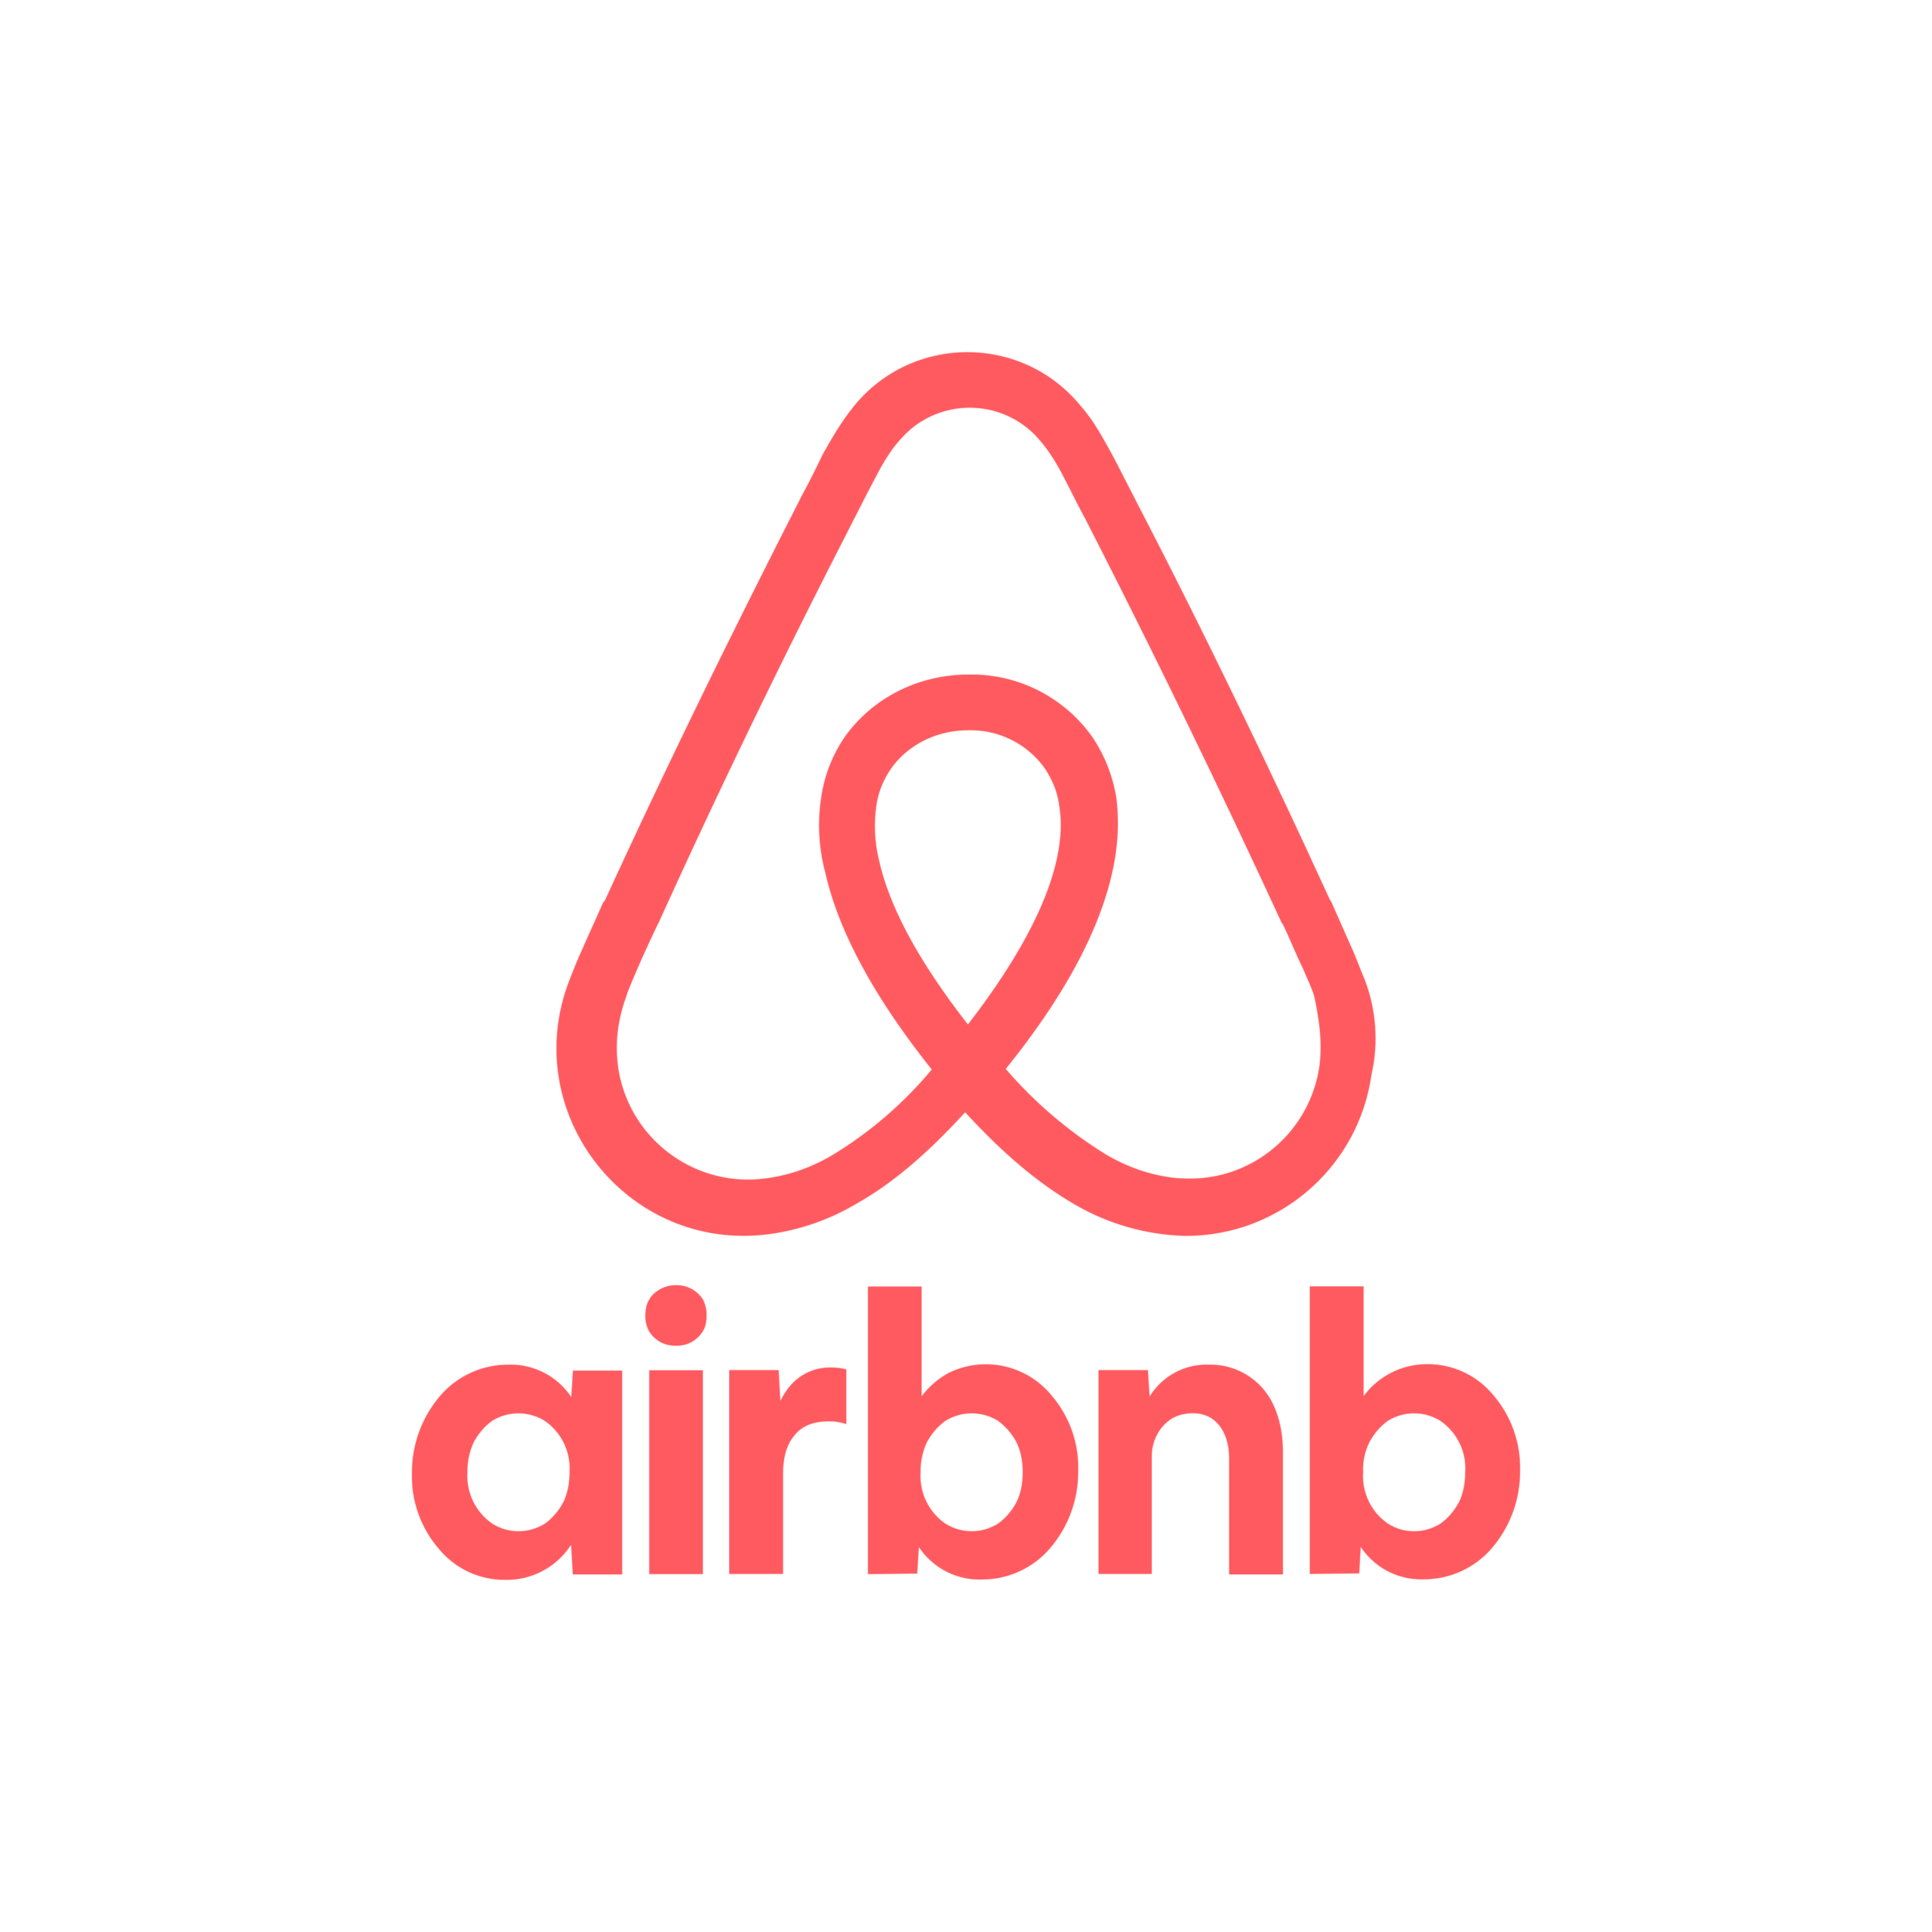 airbnb. com